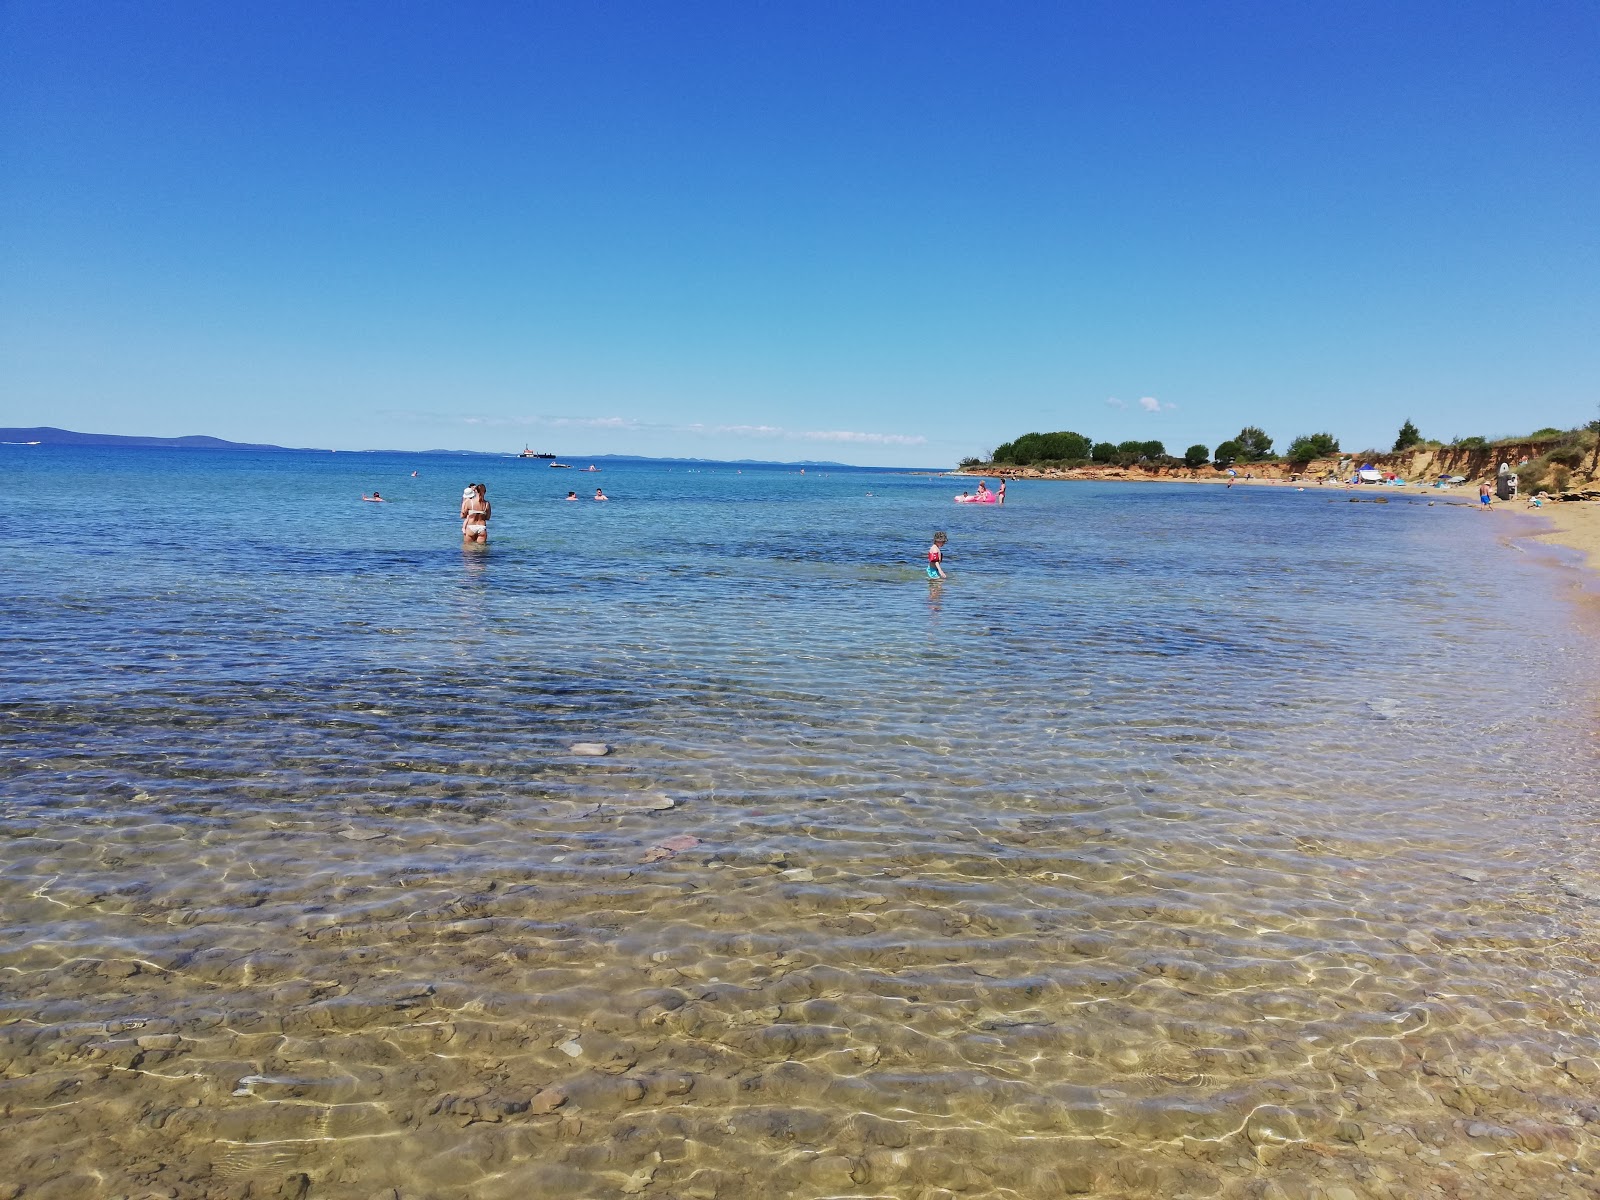 Foto de Bilotinjak beach - lugar popular entre os apreciadores de relaxamento